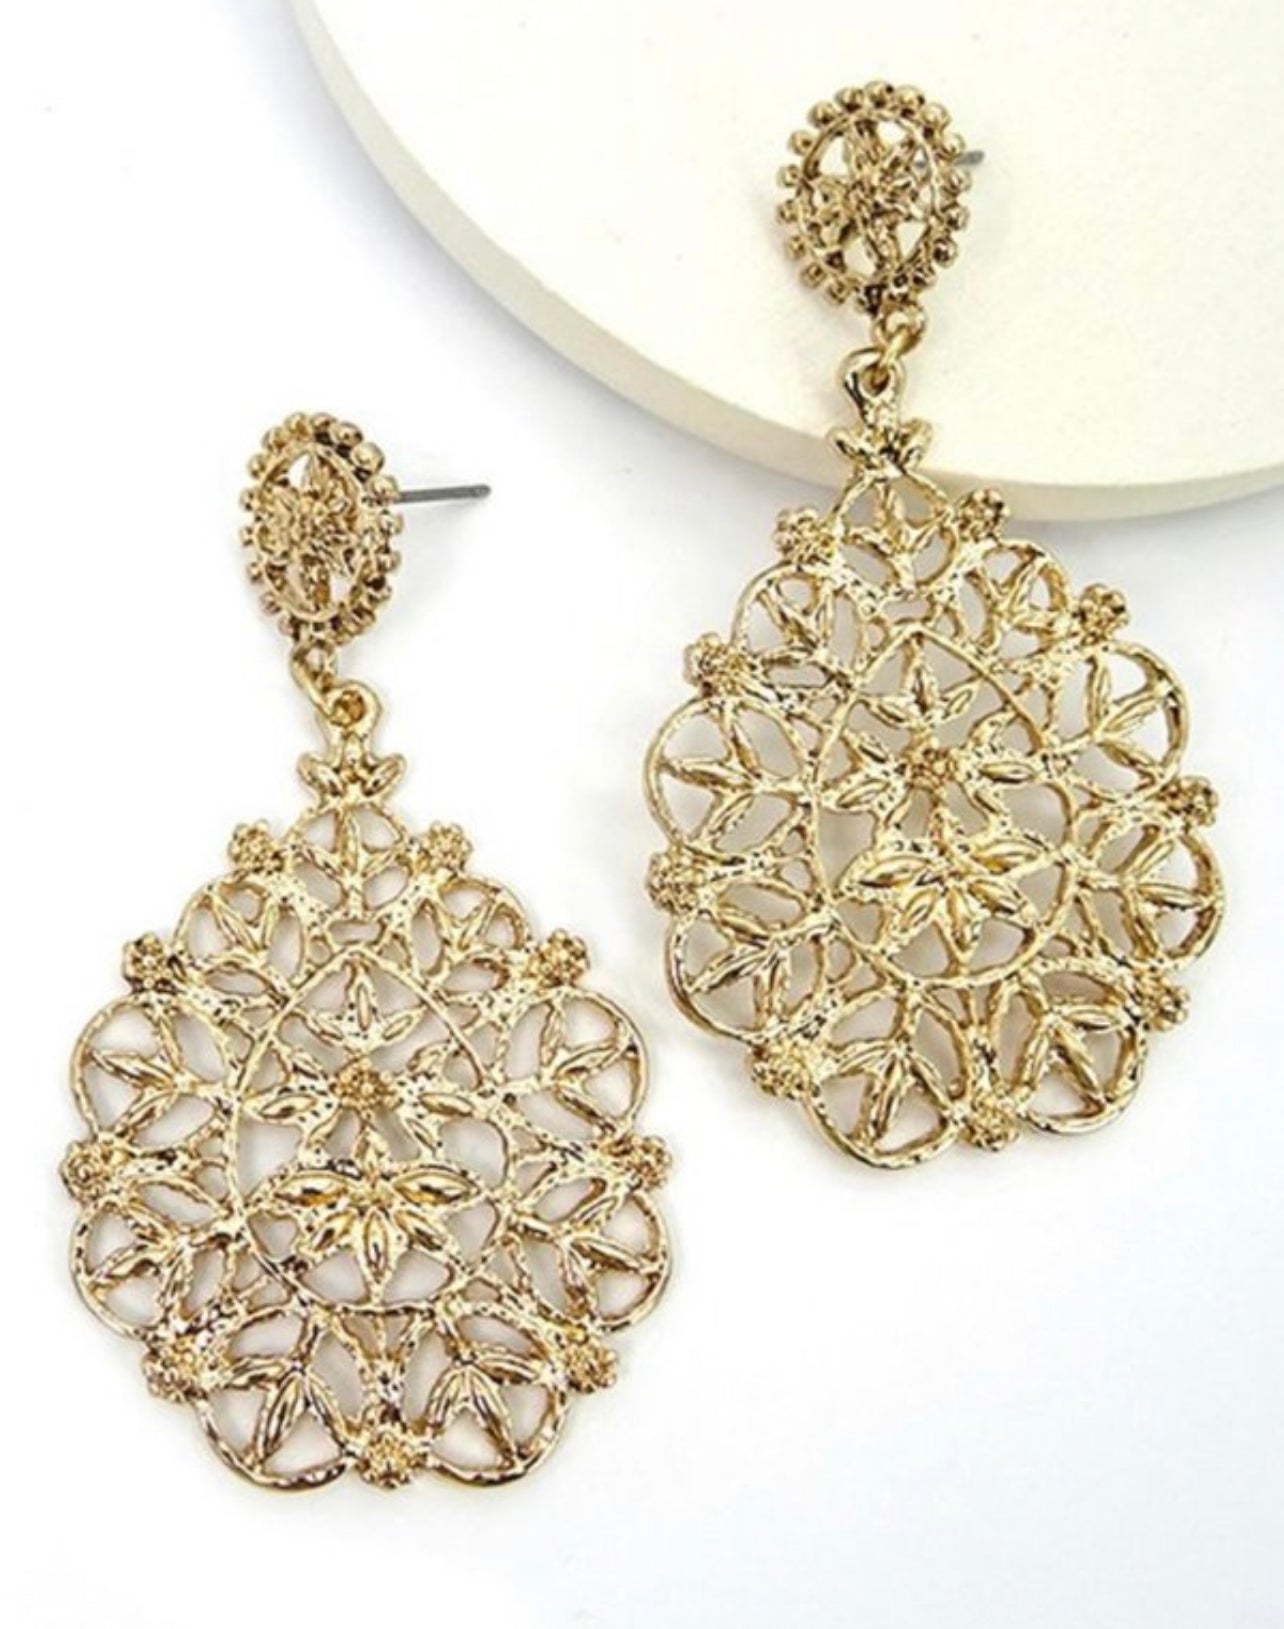 Filigree gold statement earrings